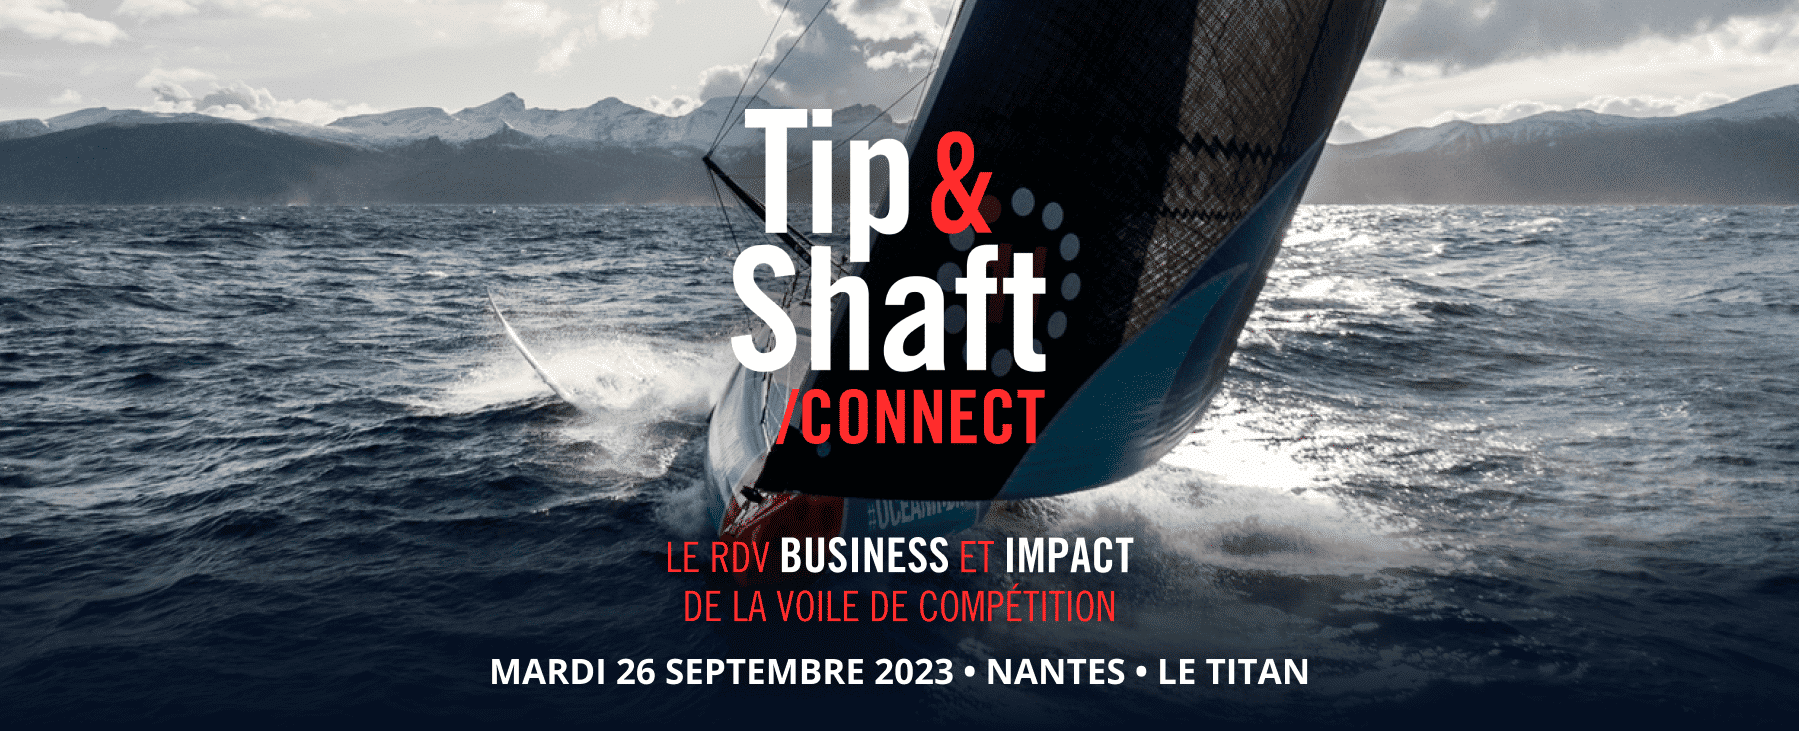 Tip & Shaft Connect Nantes 2023